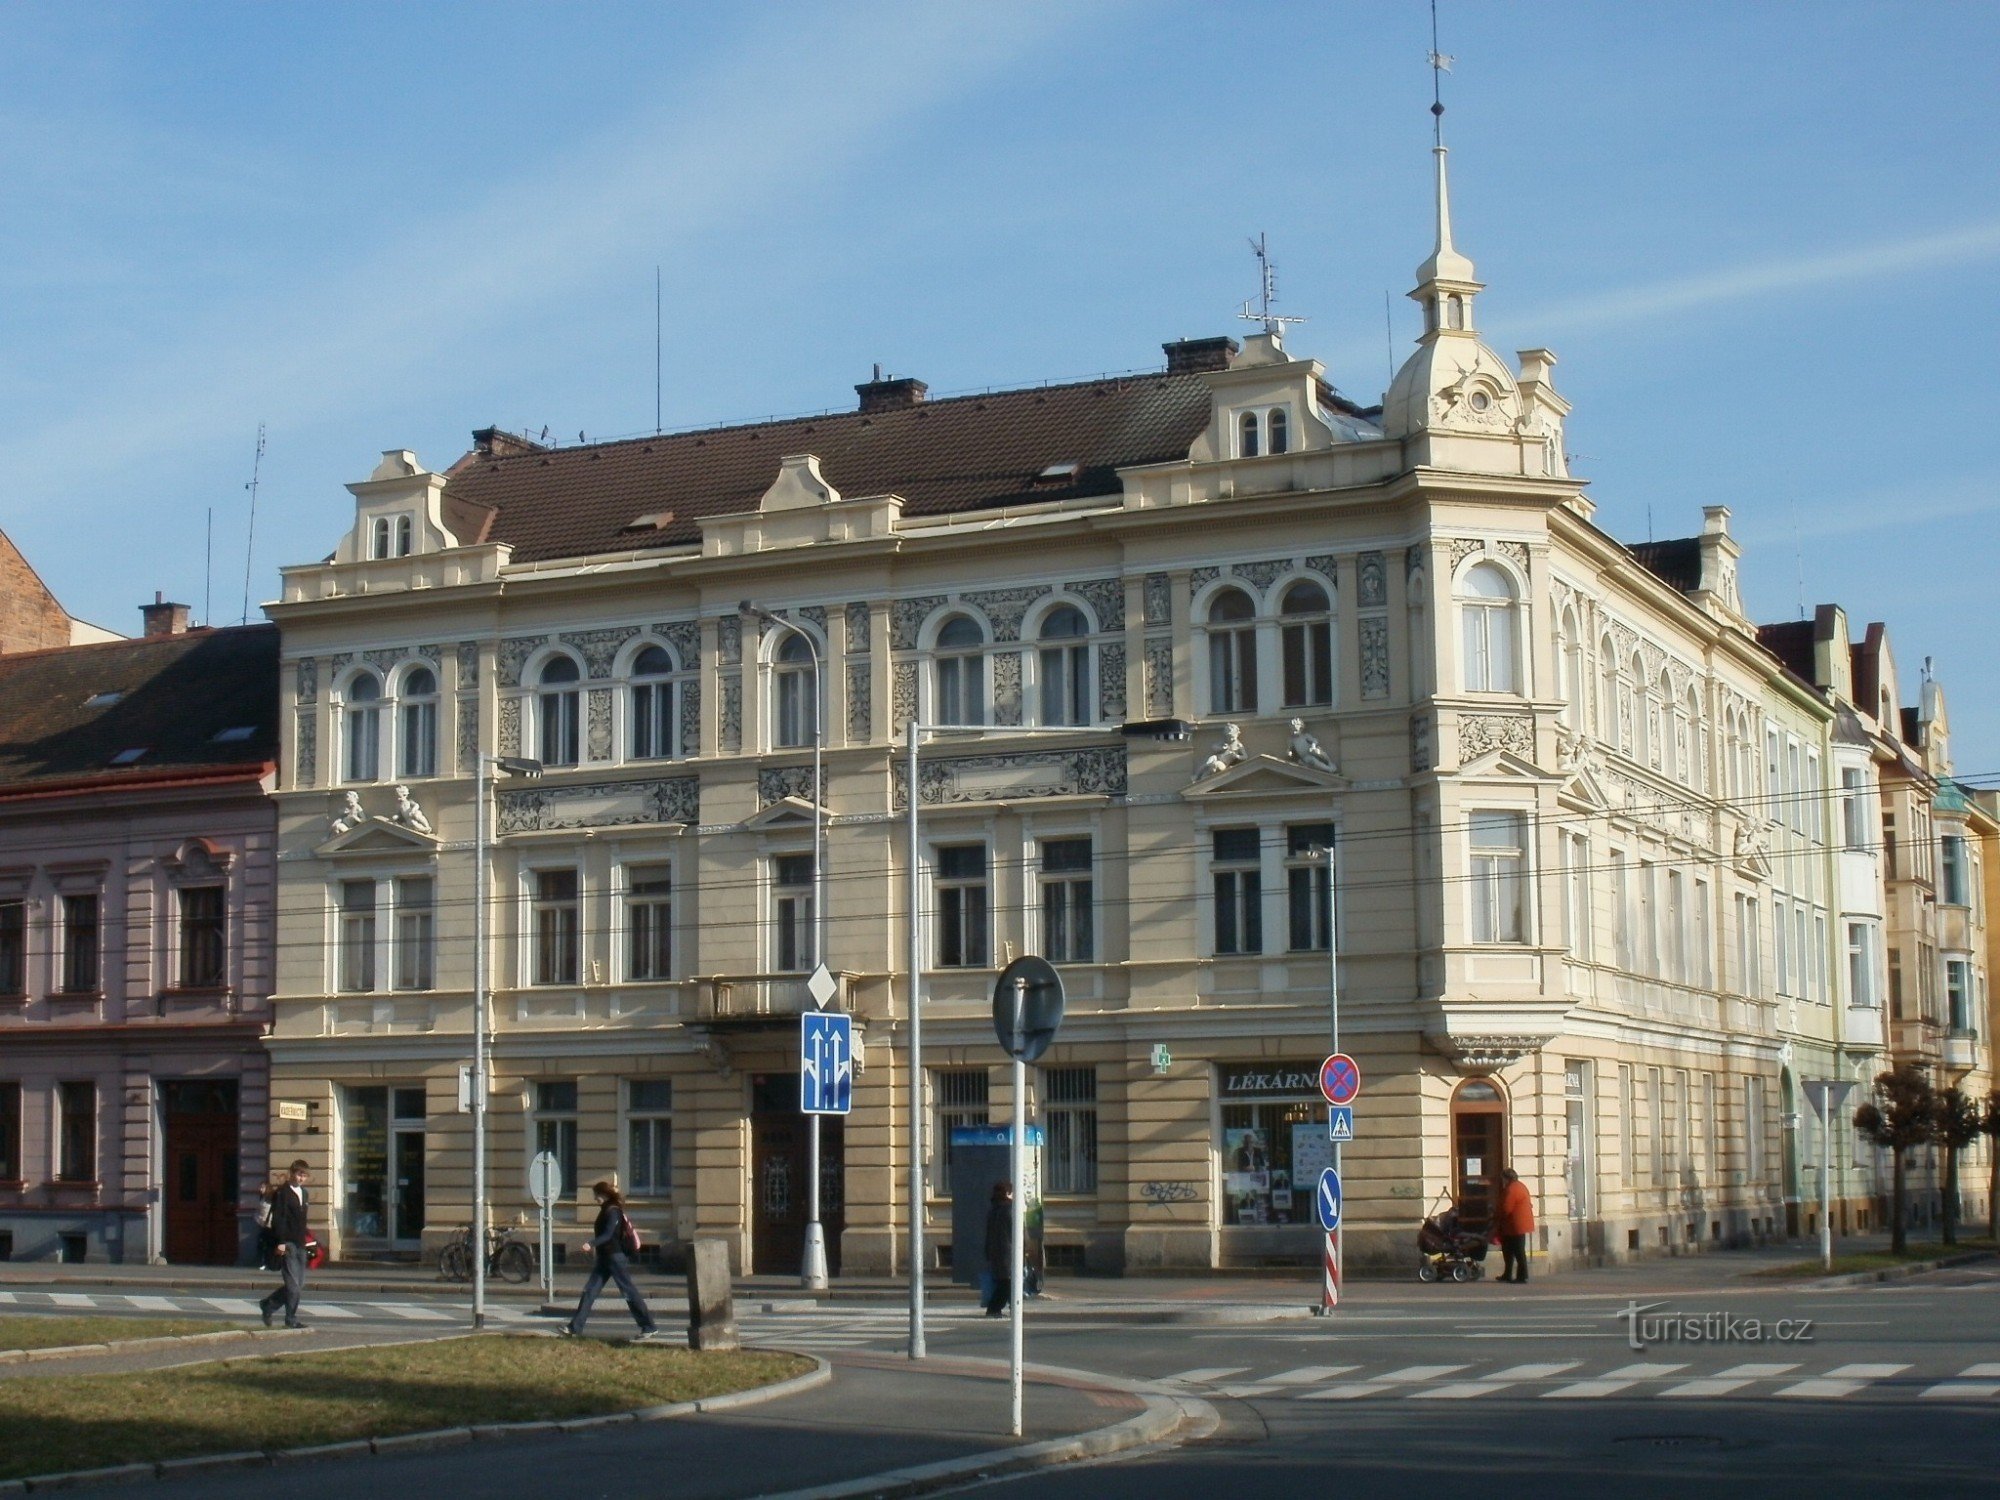 Hradec Králové - regissören Otakar Vávras födelseplats